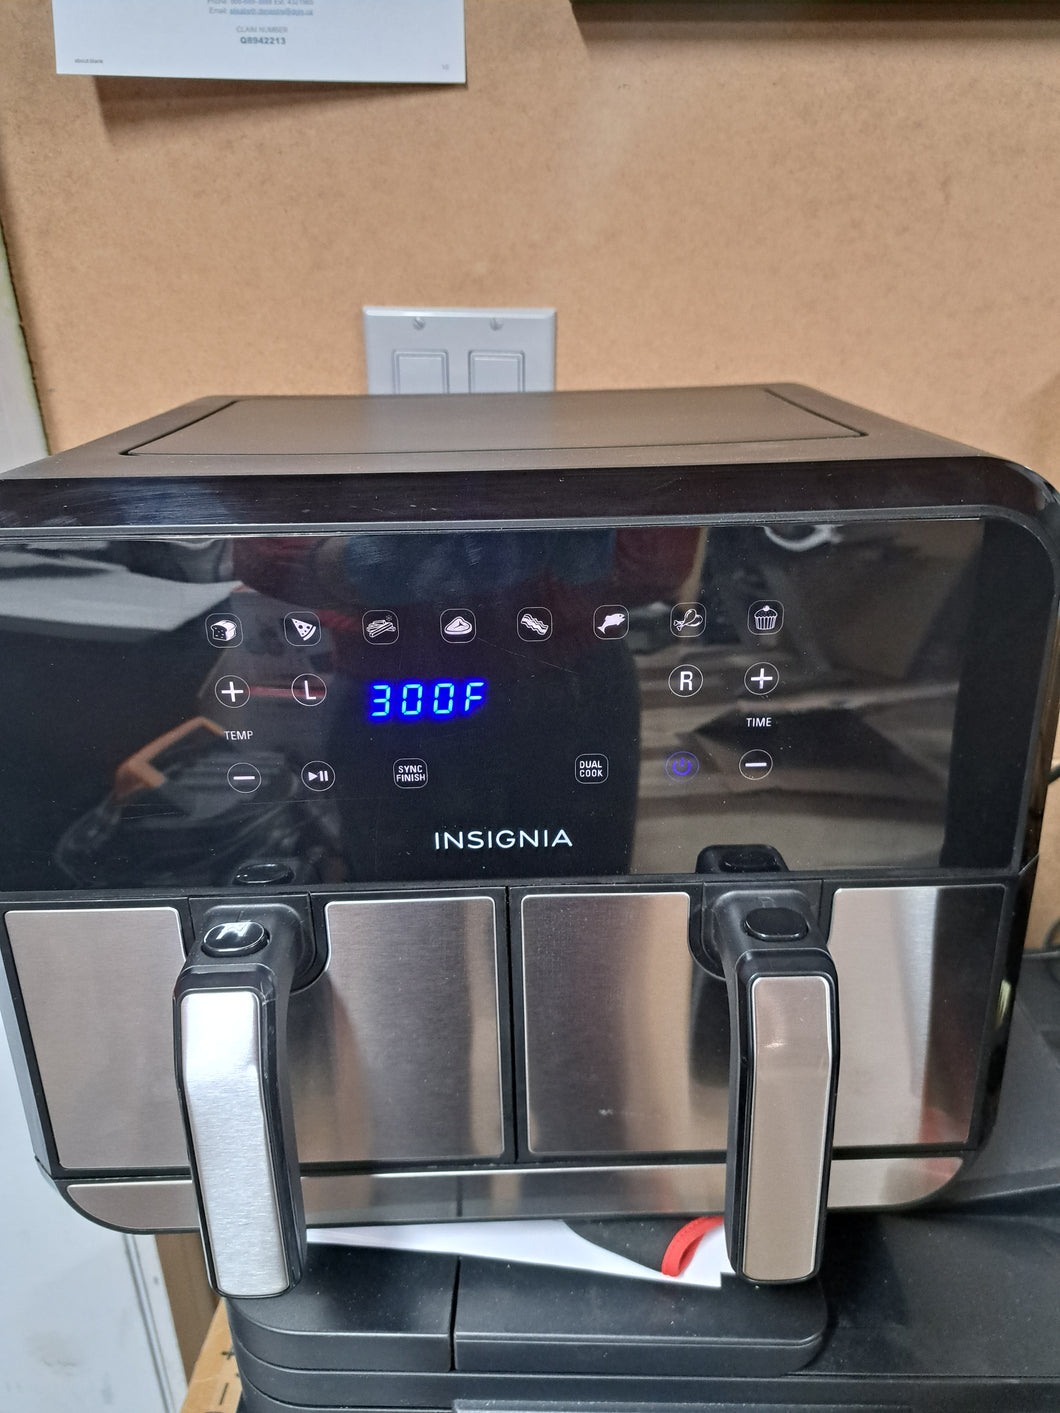 Insignia Digital Air Fryer with Dual Pan - 7.57L/8QT - Black